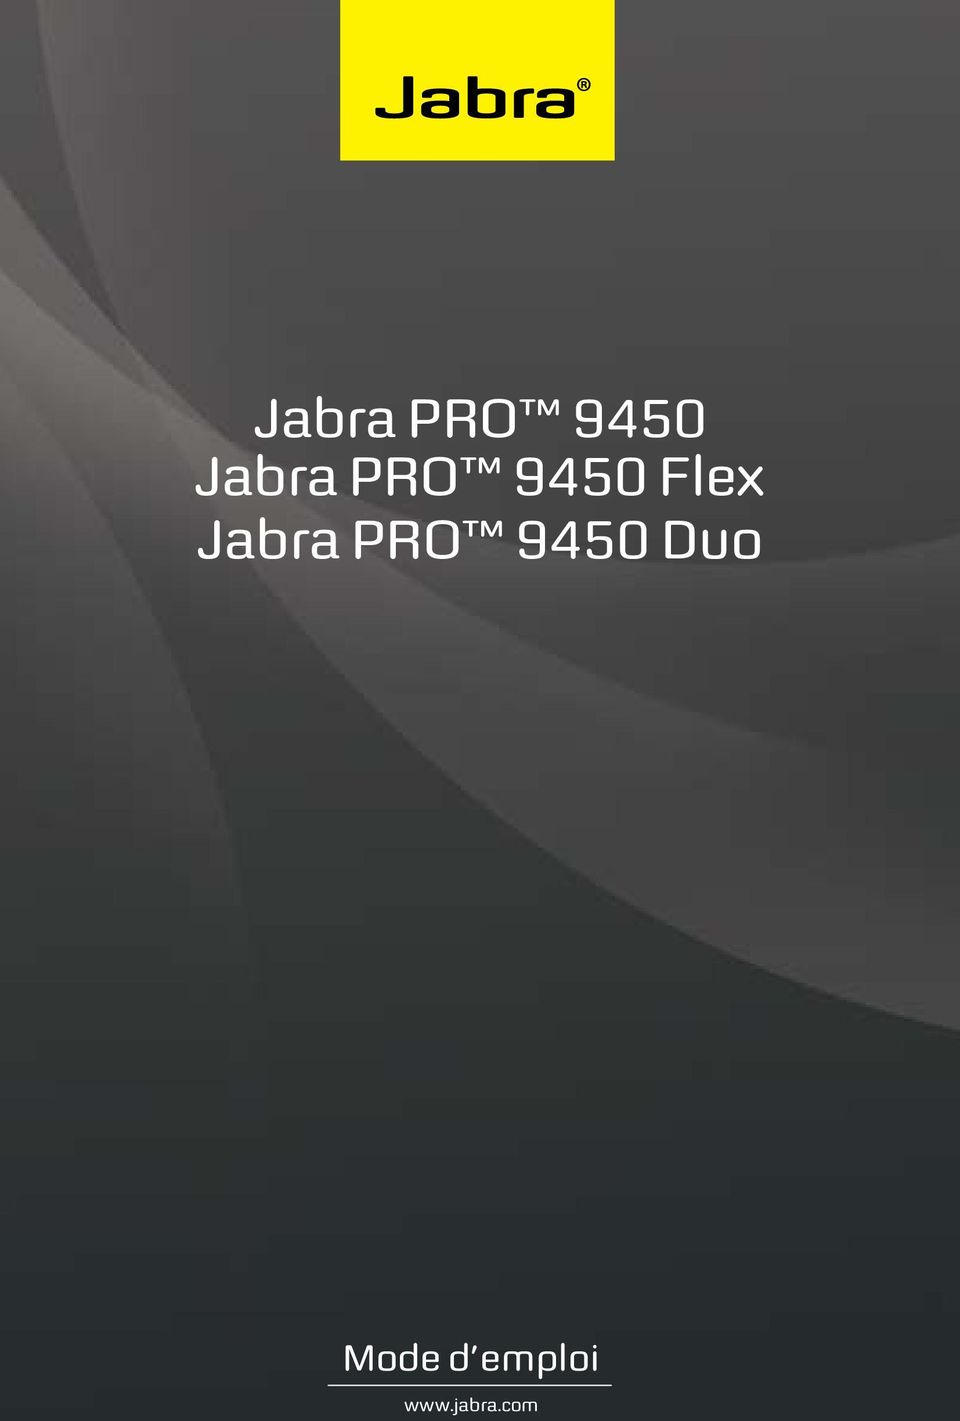 PRO 9450 Duo Mode d